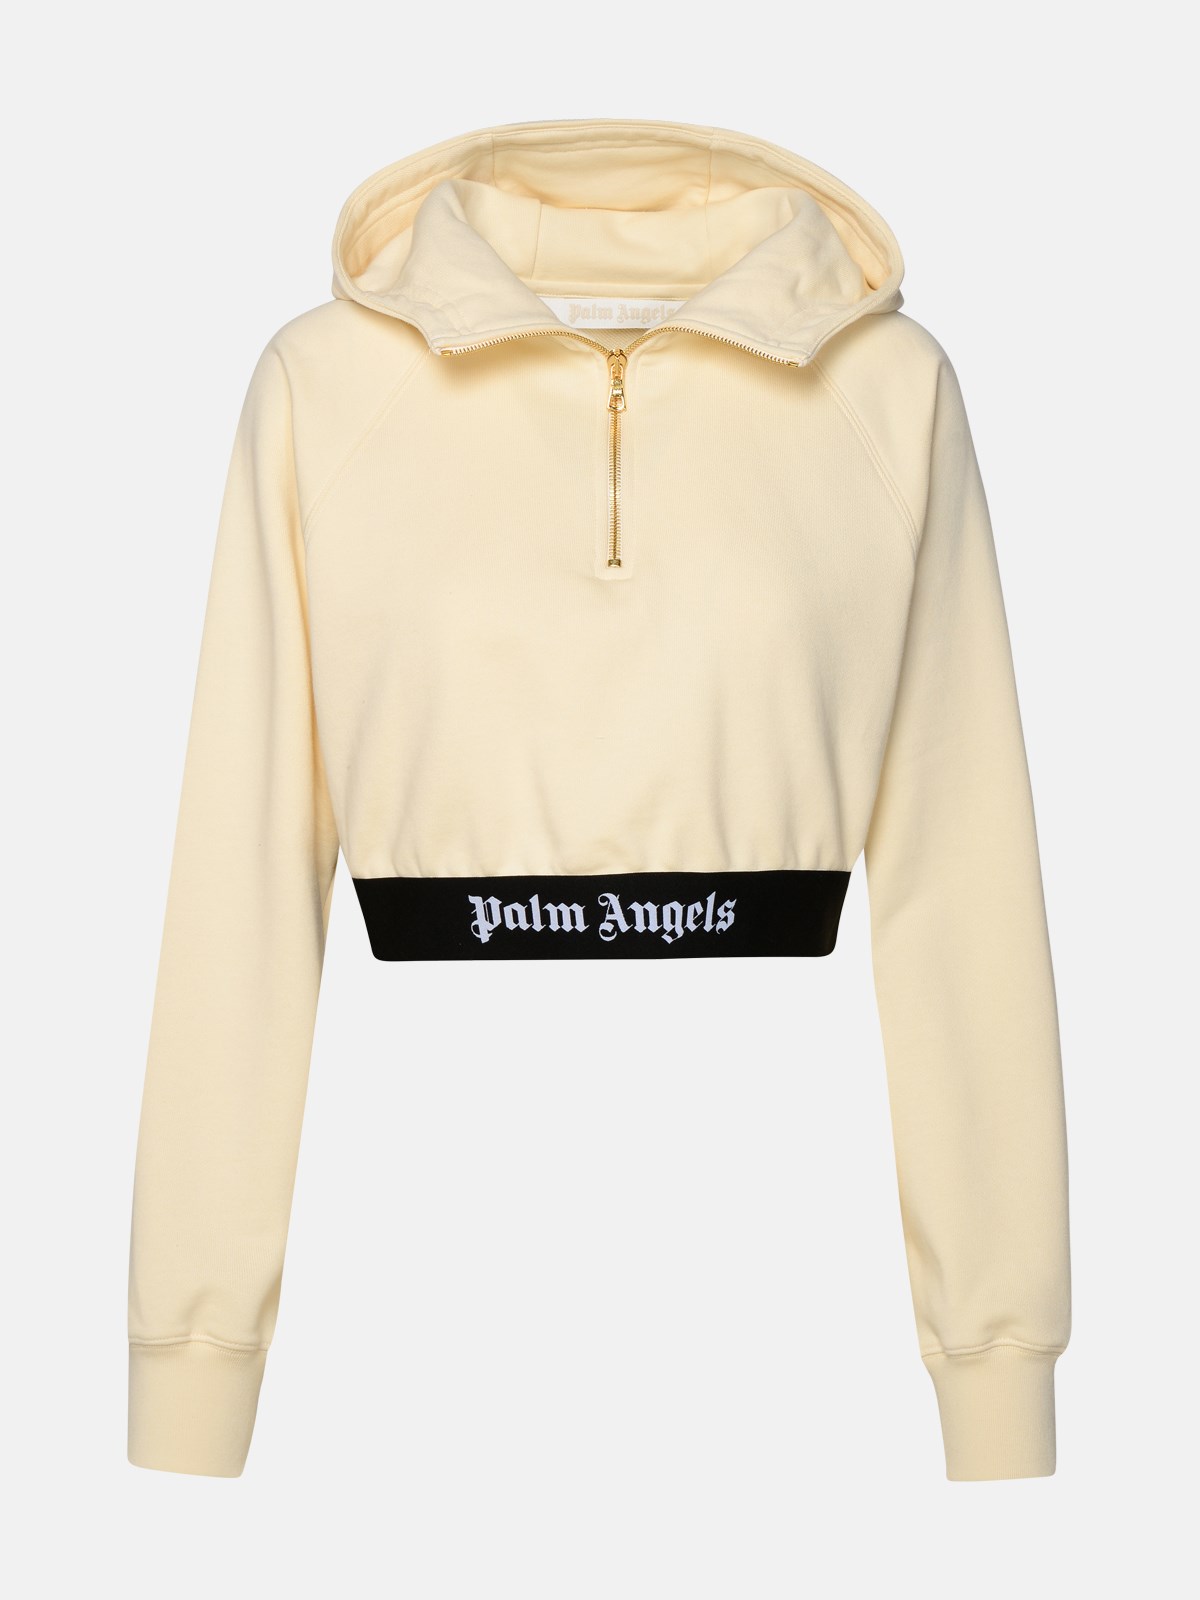 Palm Angels Ivory Cotton Sweatshirt